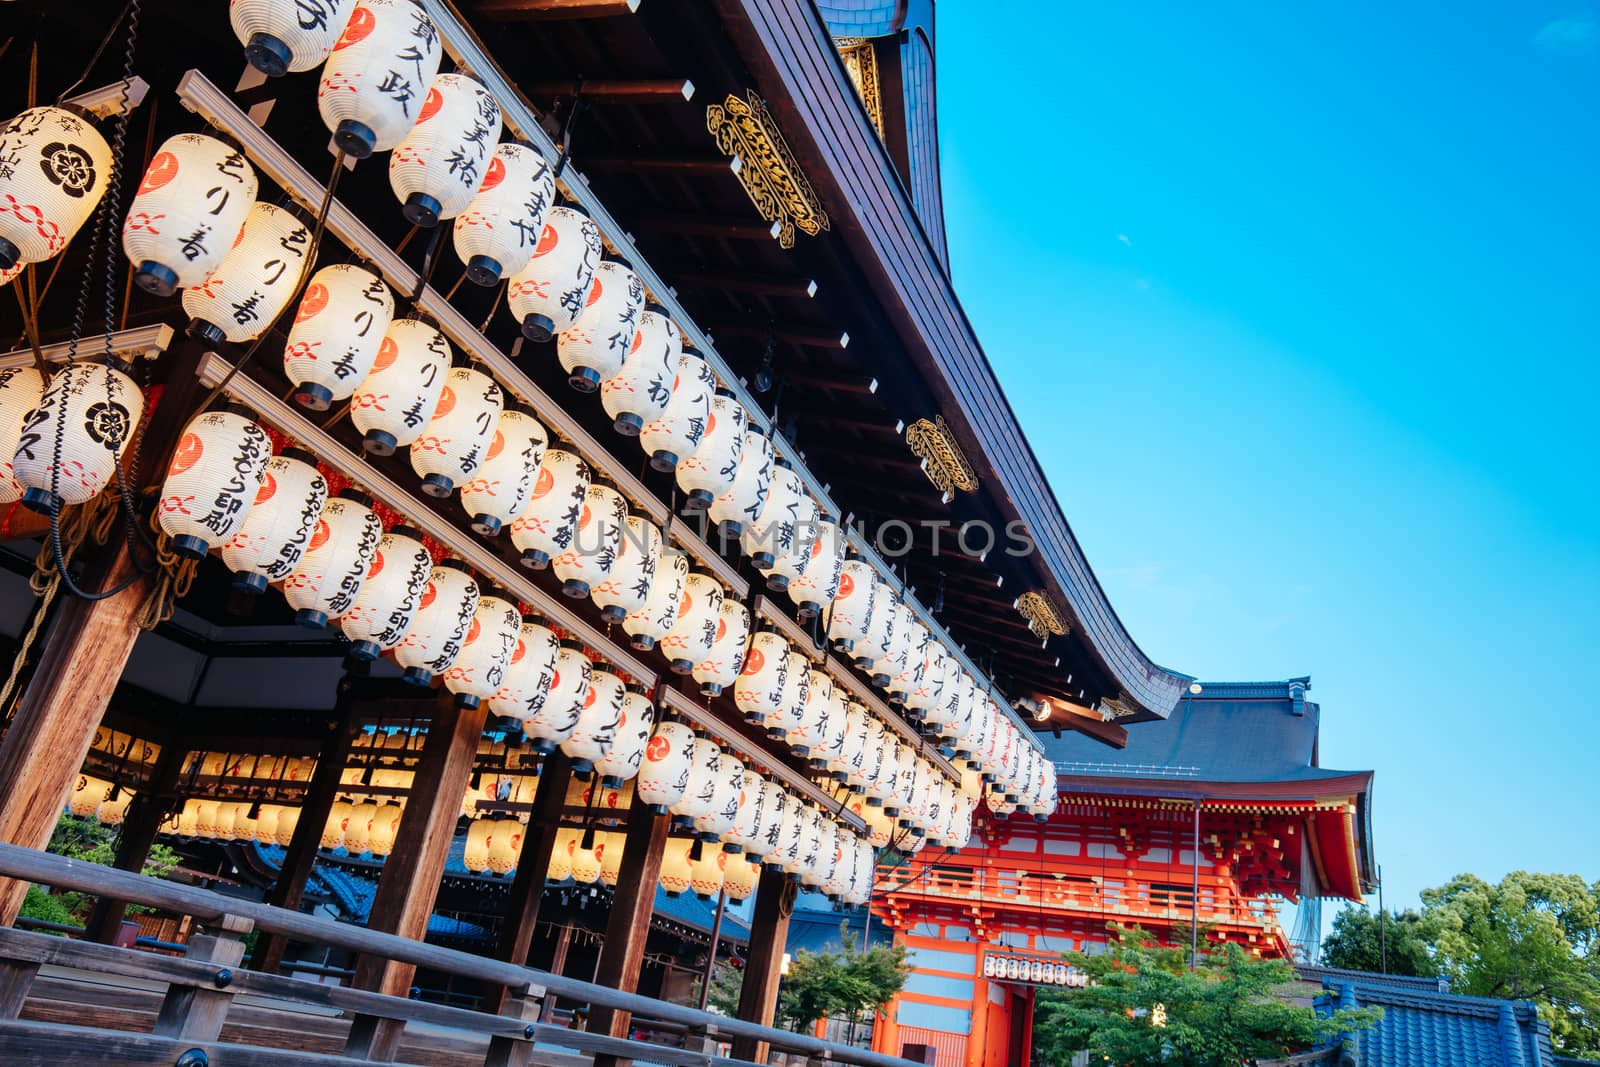 Yasaka-Jinja Shrine in Kyoto Japan by FiledIMAGE